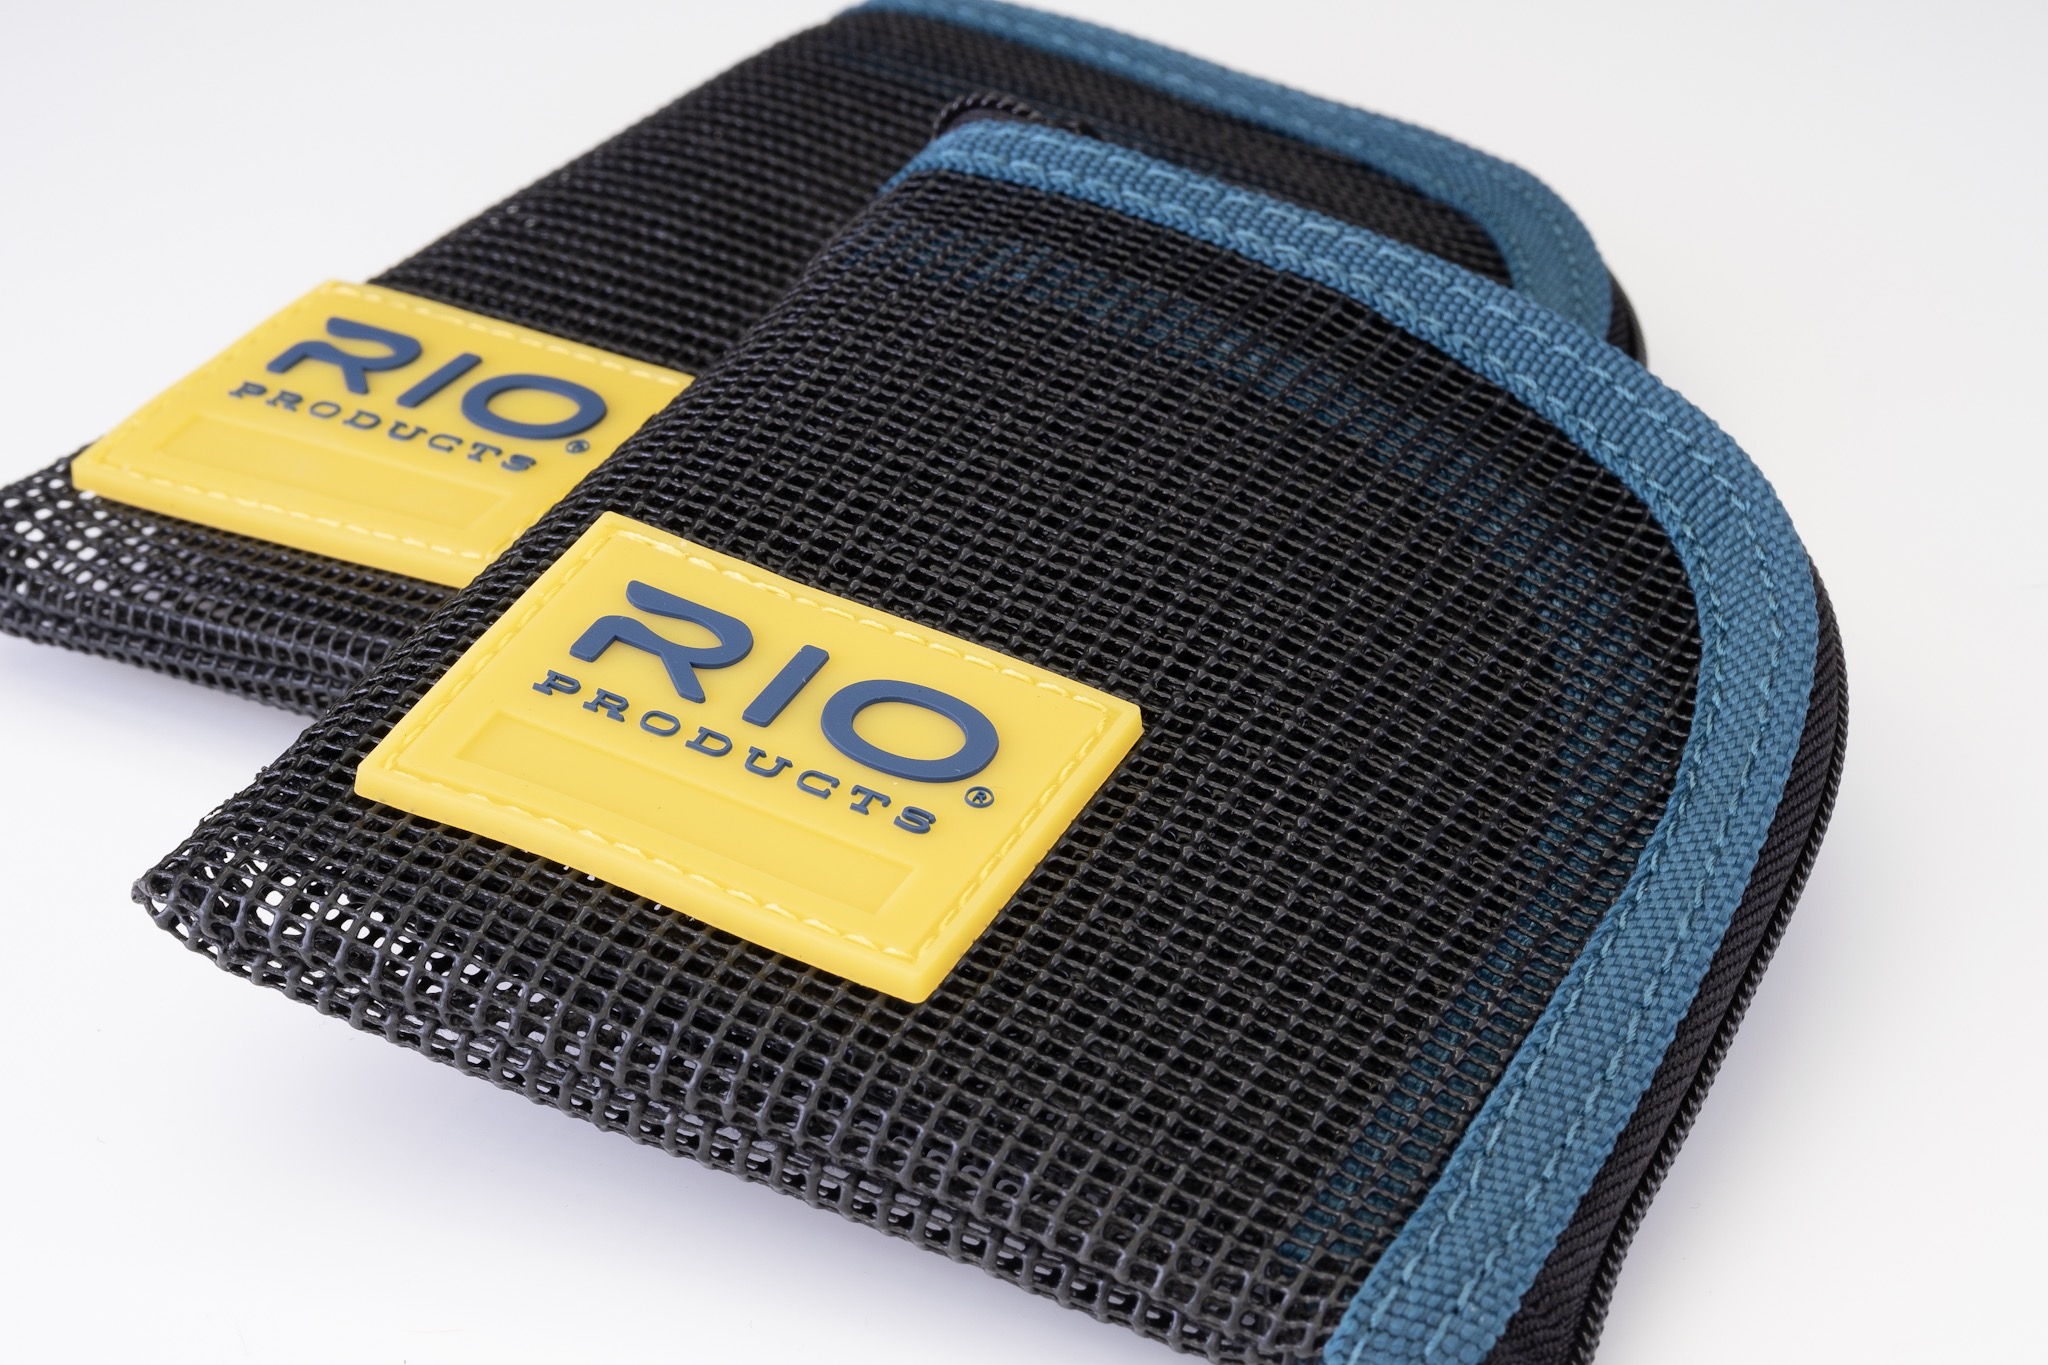 Rio Leader Wallet Insert Options 6-26002 for sale online 